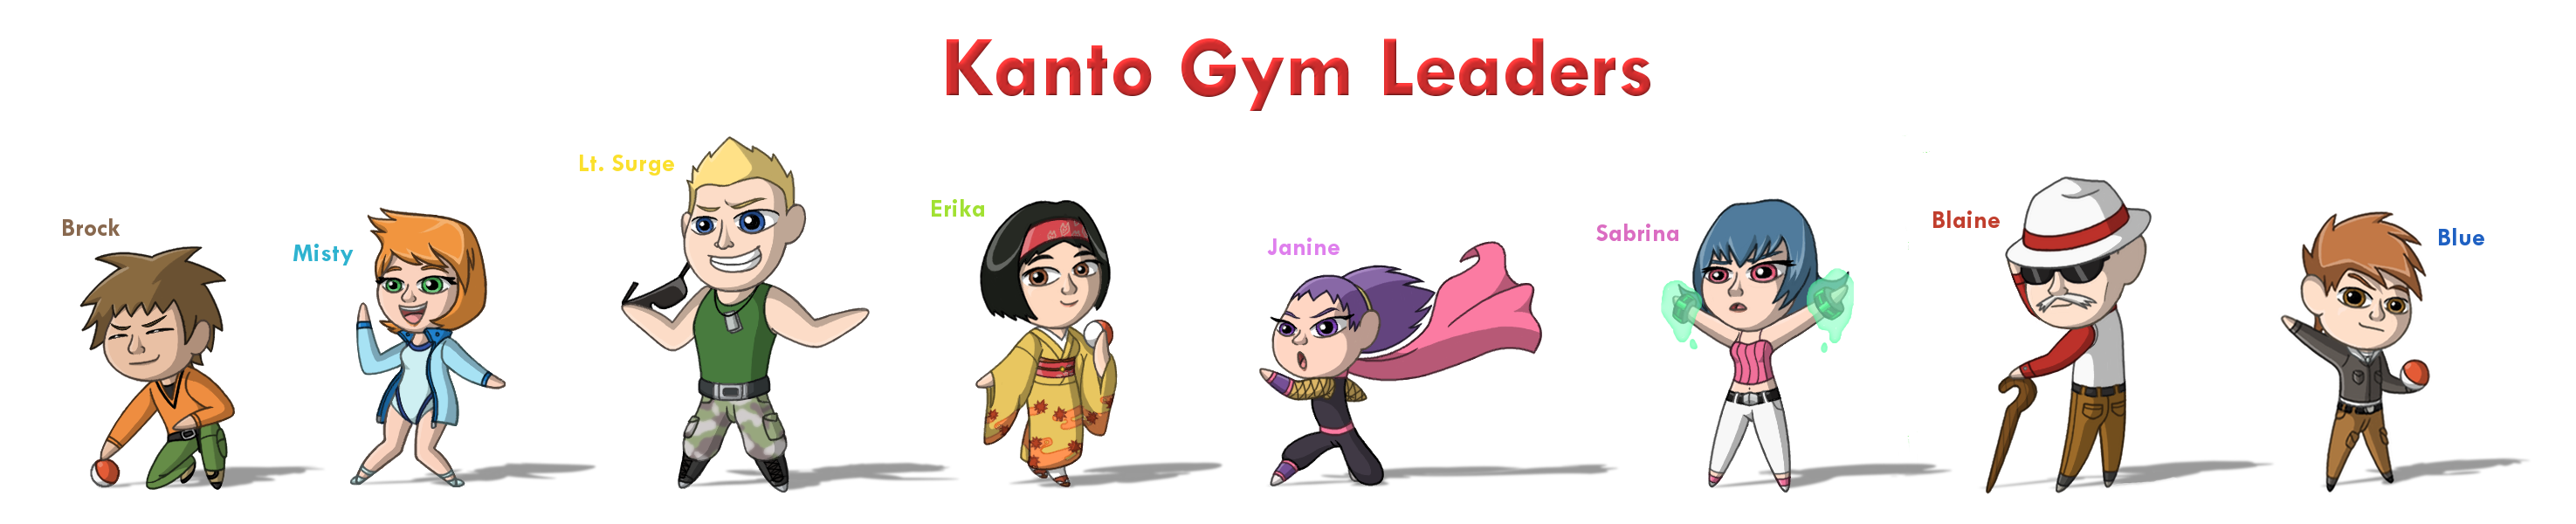 Lt Surge - Kanto Gym Leaders #3 by CrossToons on DeviantArt